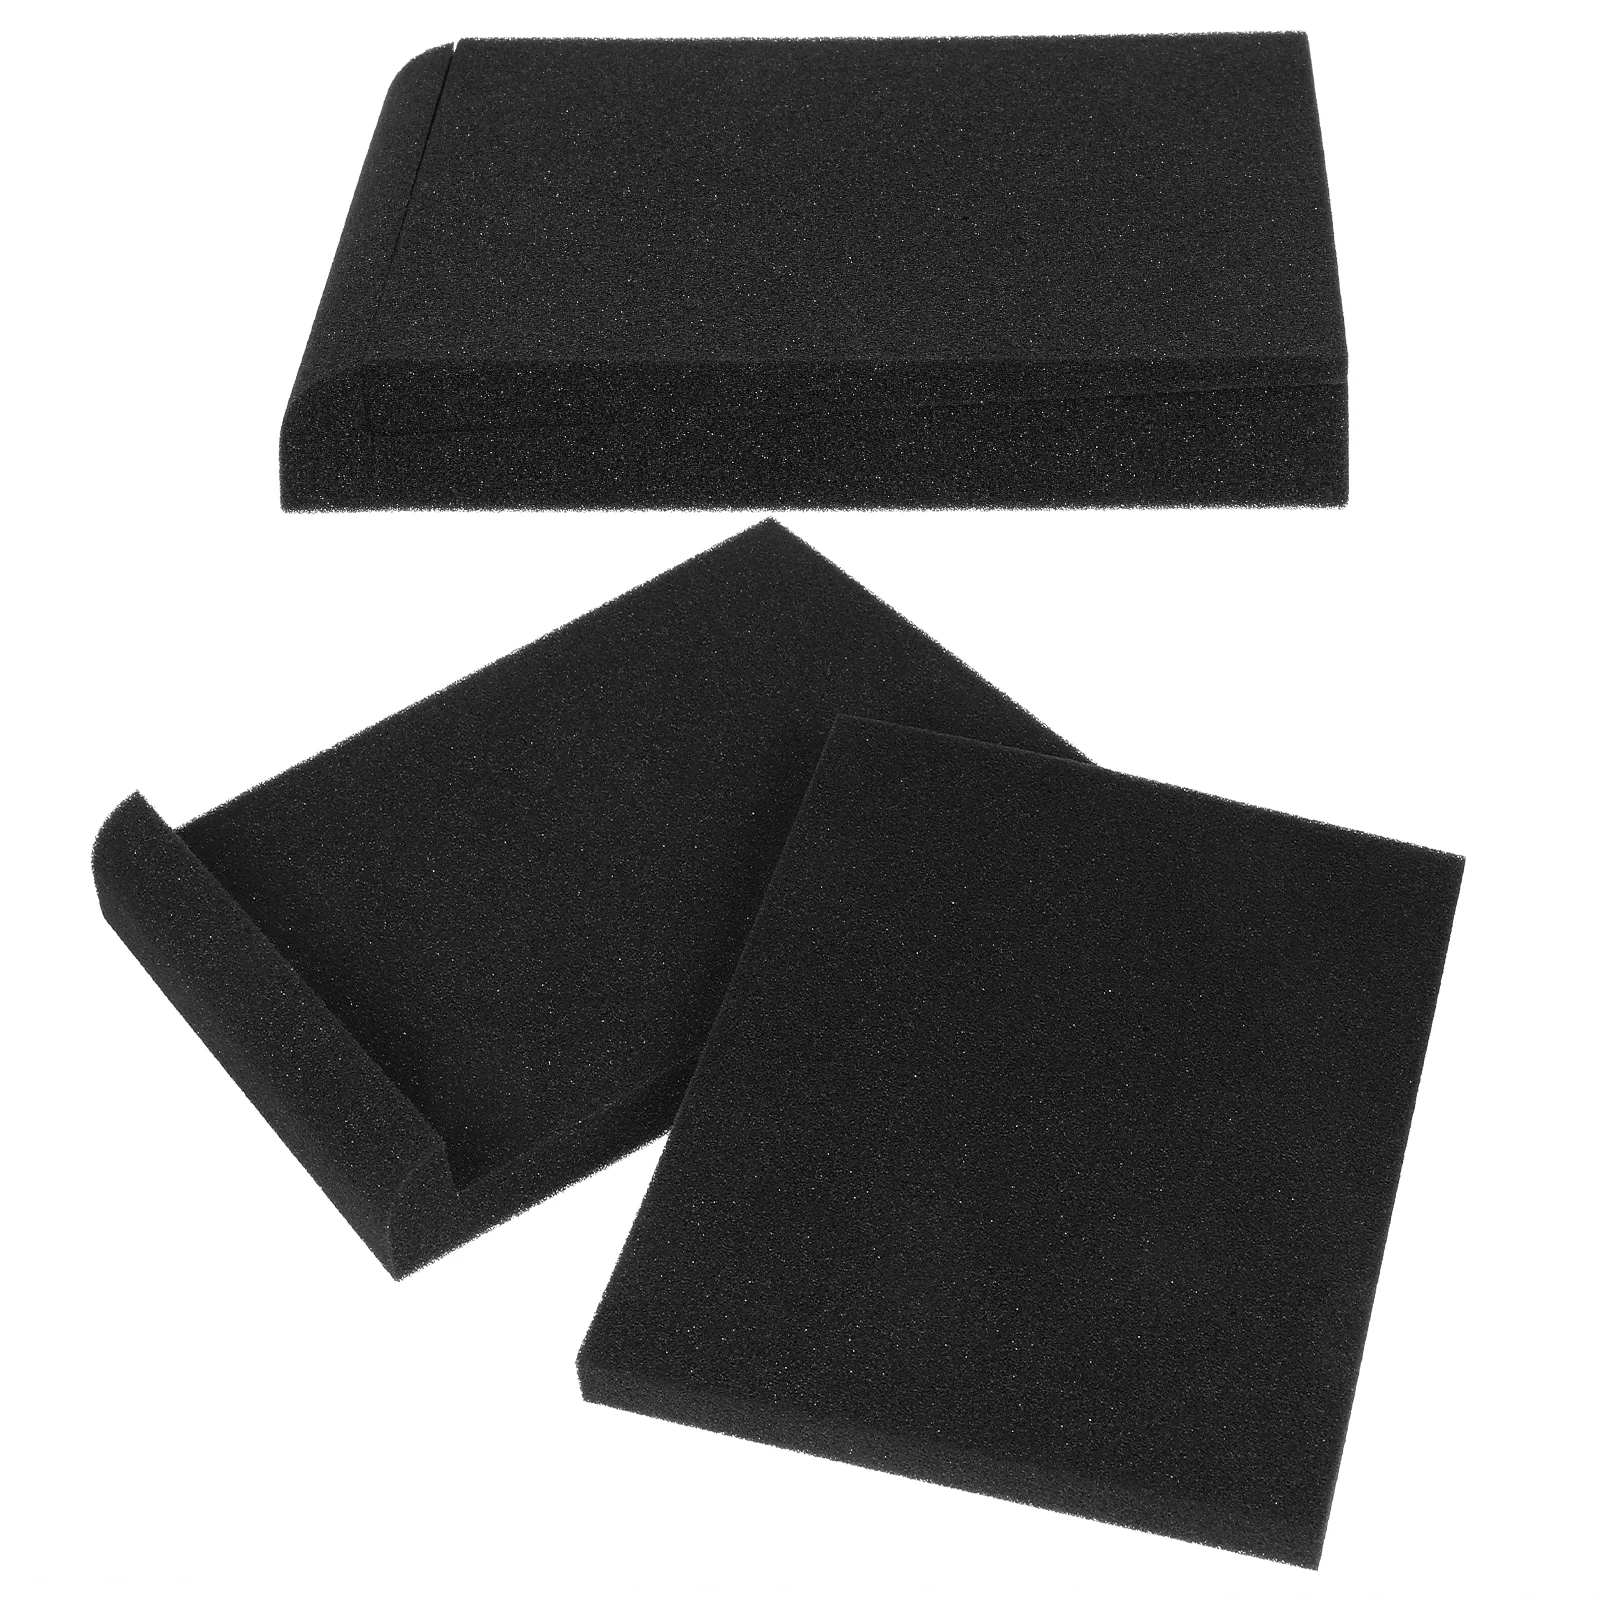 

Speaker Foam Isolation Acoustic Pad Pads Studio Dampening Platform Monitor Riser Sound Cushion Foams Panel Mat Musical Replace